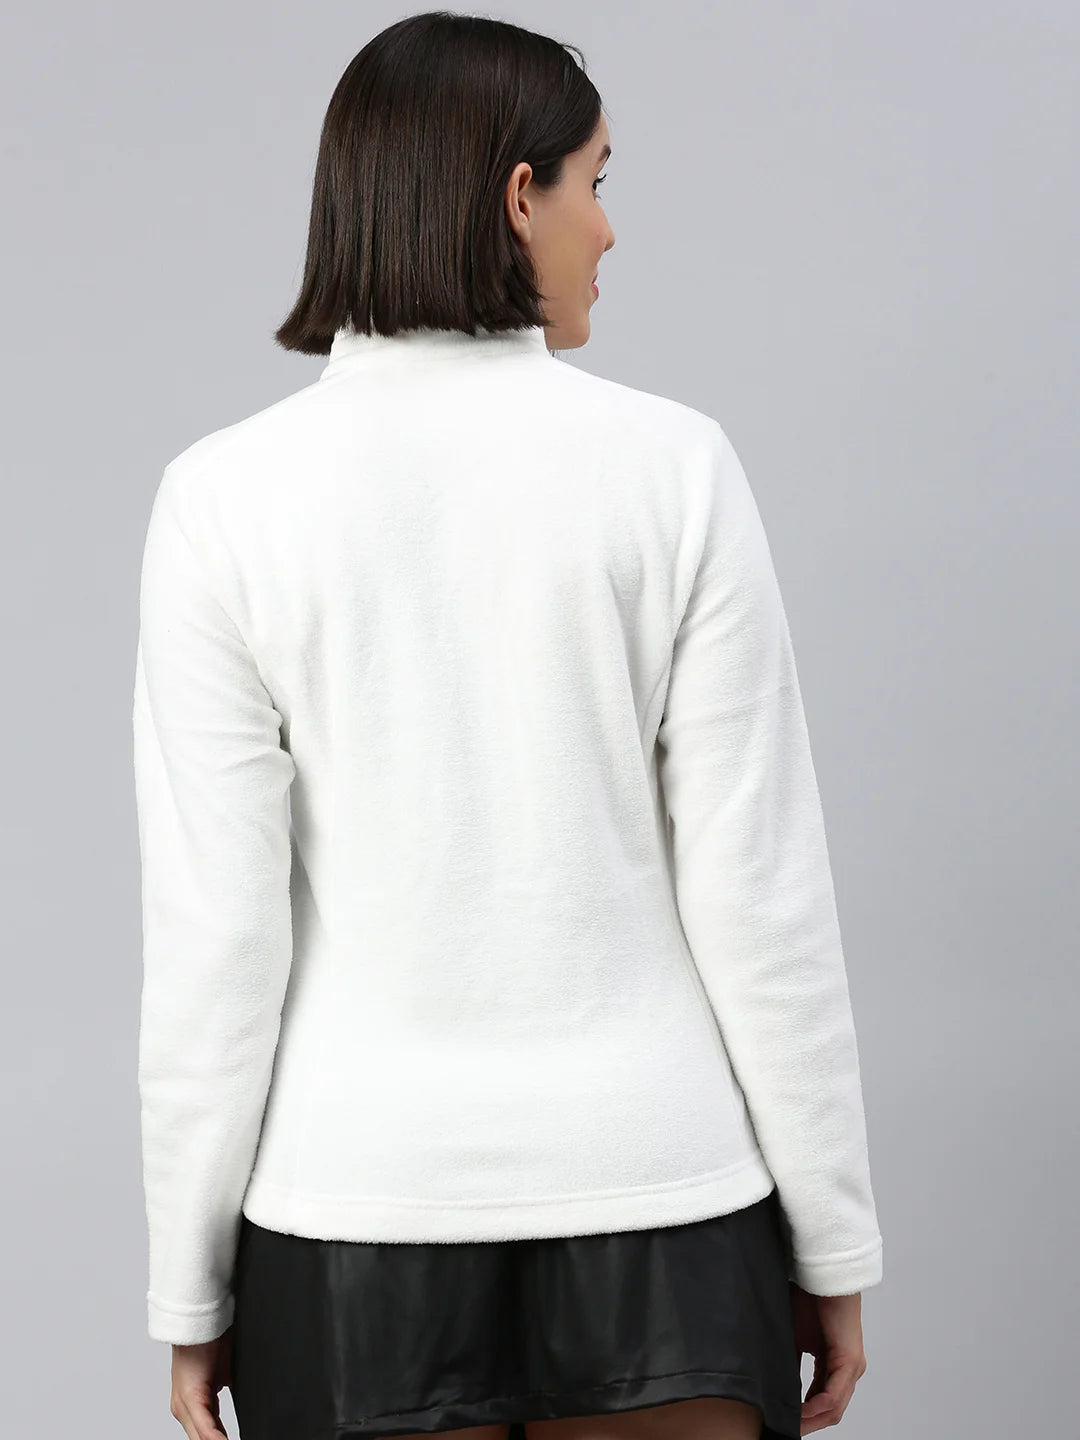 femmes-montreal-polyester-veste-polaire-blanc-casse-back